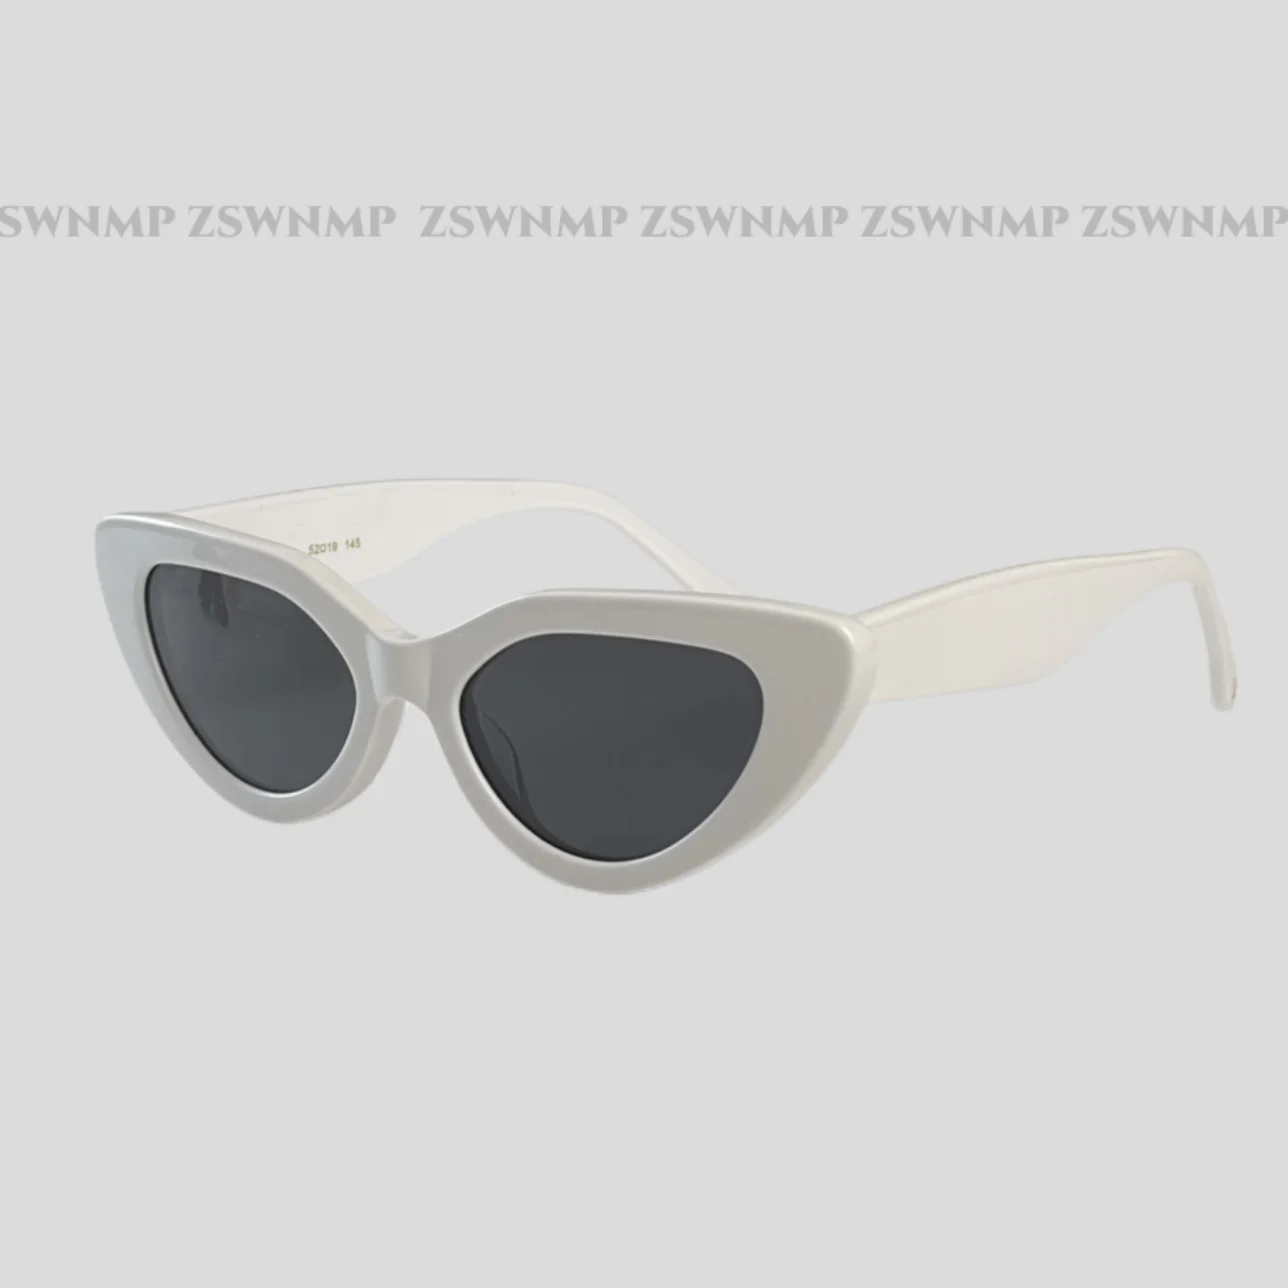 Cat Eye Letter Fashion Sunglasses Woman Vintage Luxury Brand Designer Black  Glasses Sun Glasses For Female ch5146 Eyewear Shades - AliExpress